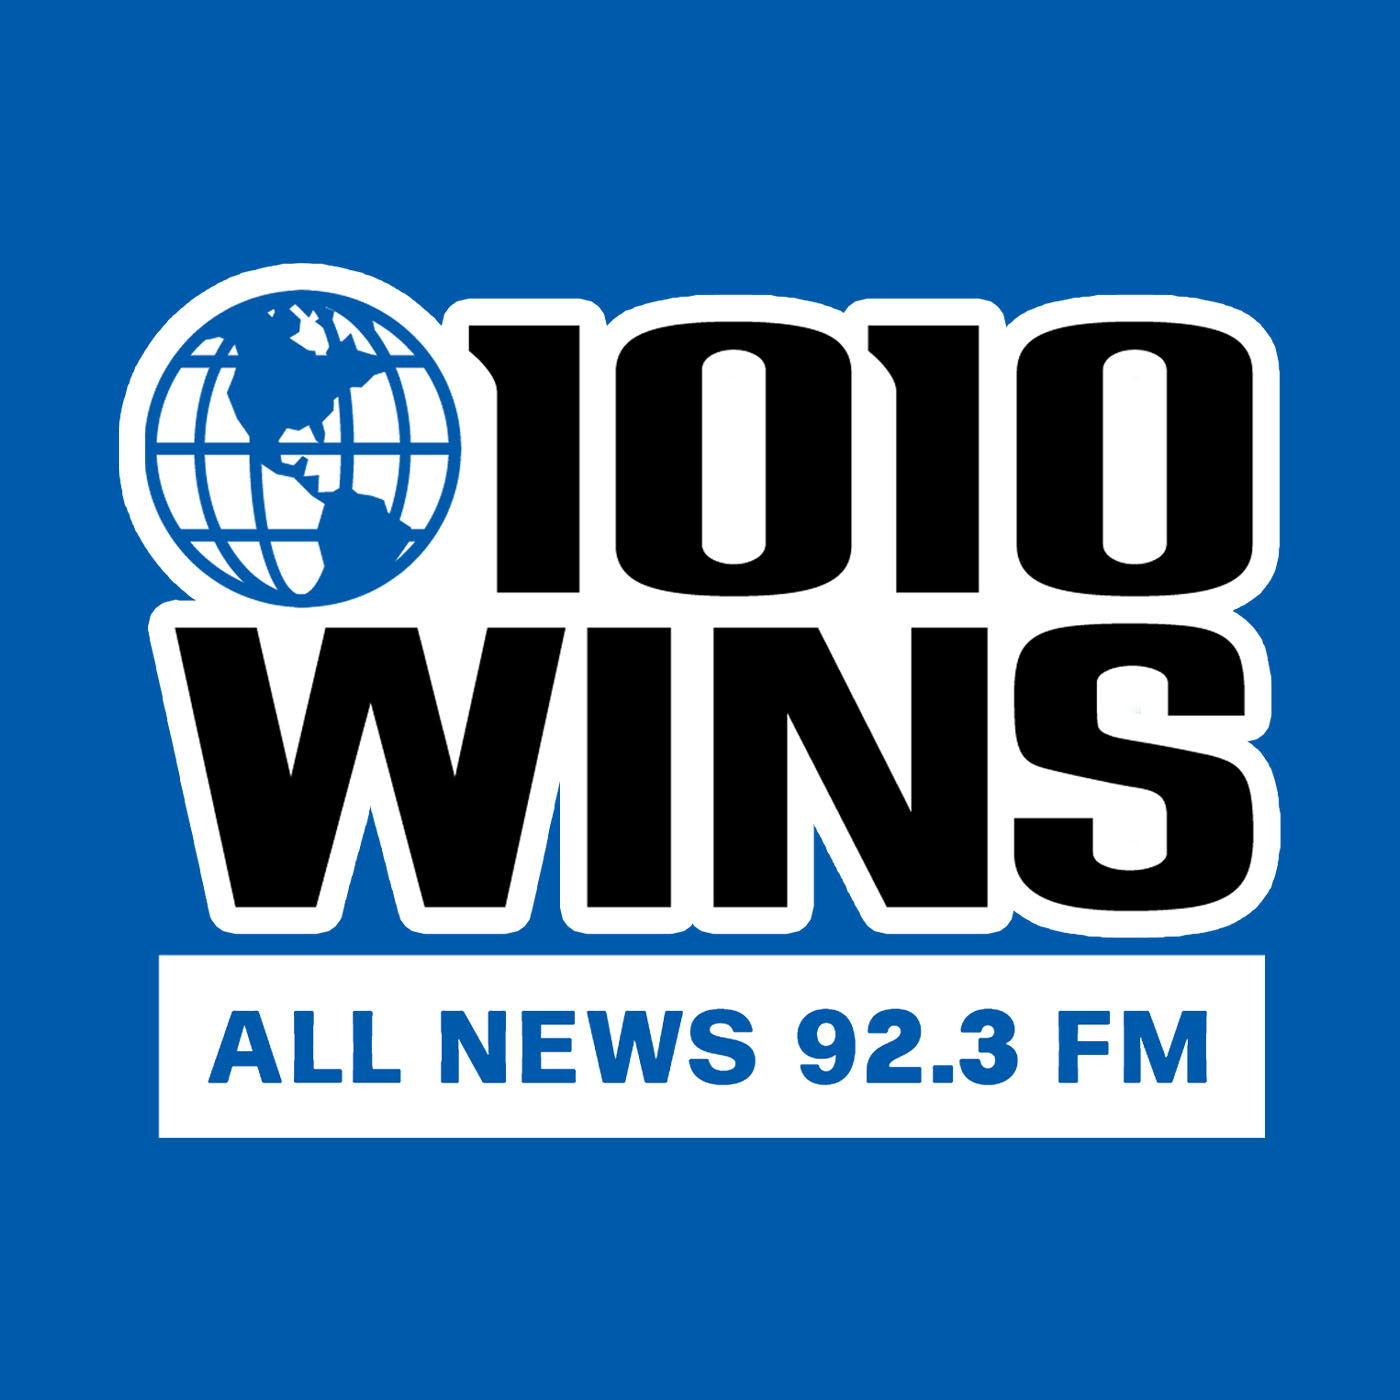 1010 WINS at 92.3 FM: 2024 Marconi - Major Market Radio Awards Entry